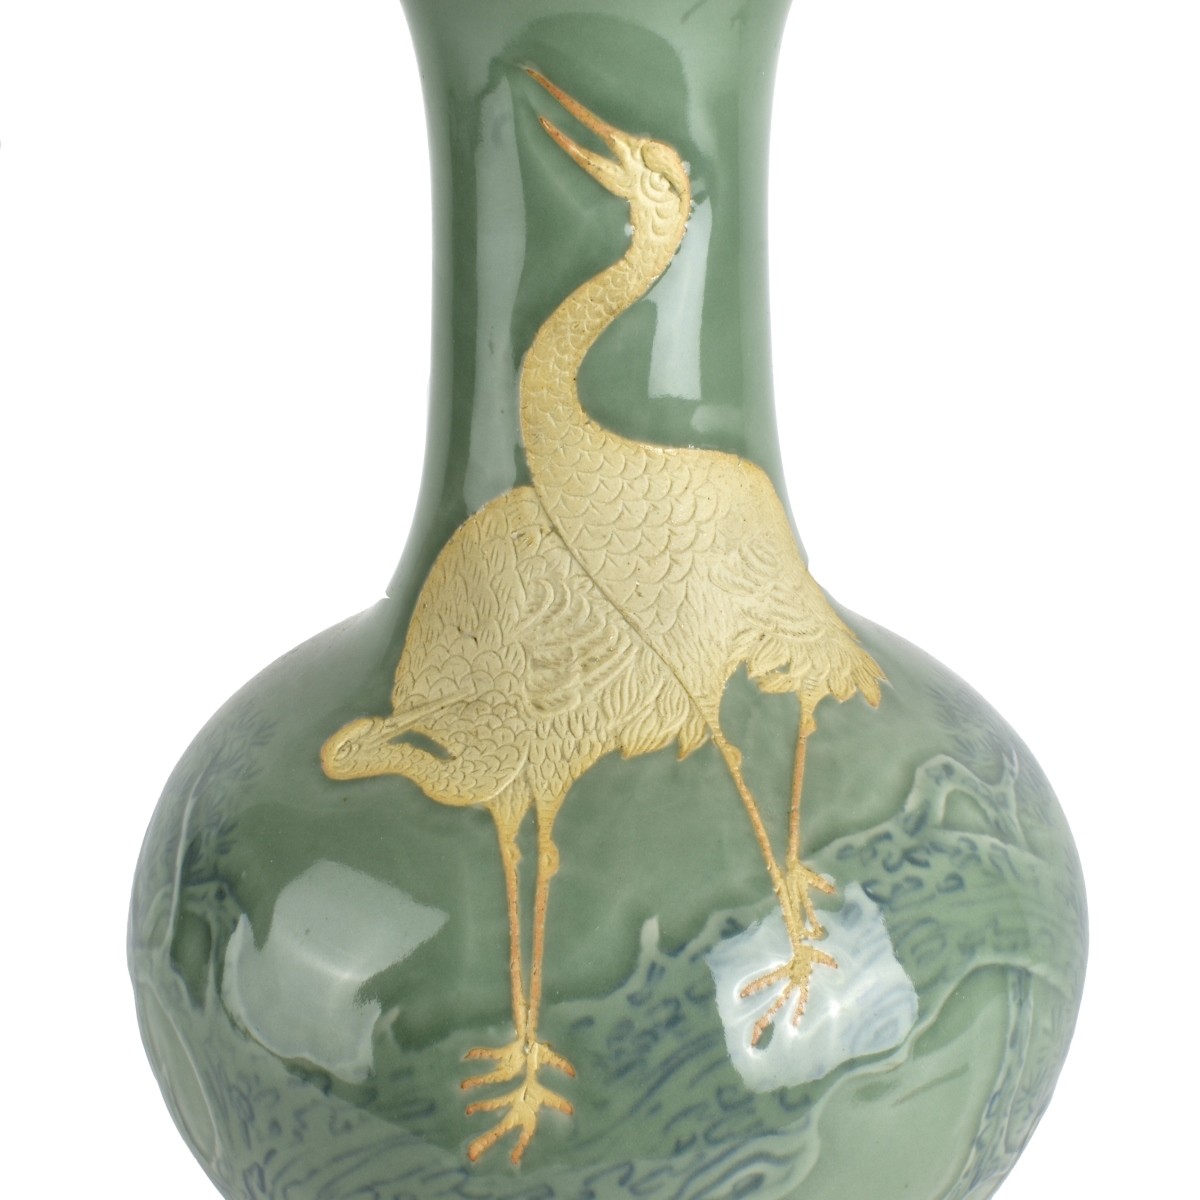 Chinese Celadon Crain Vase